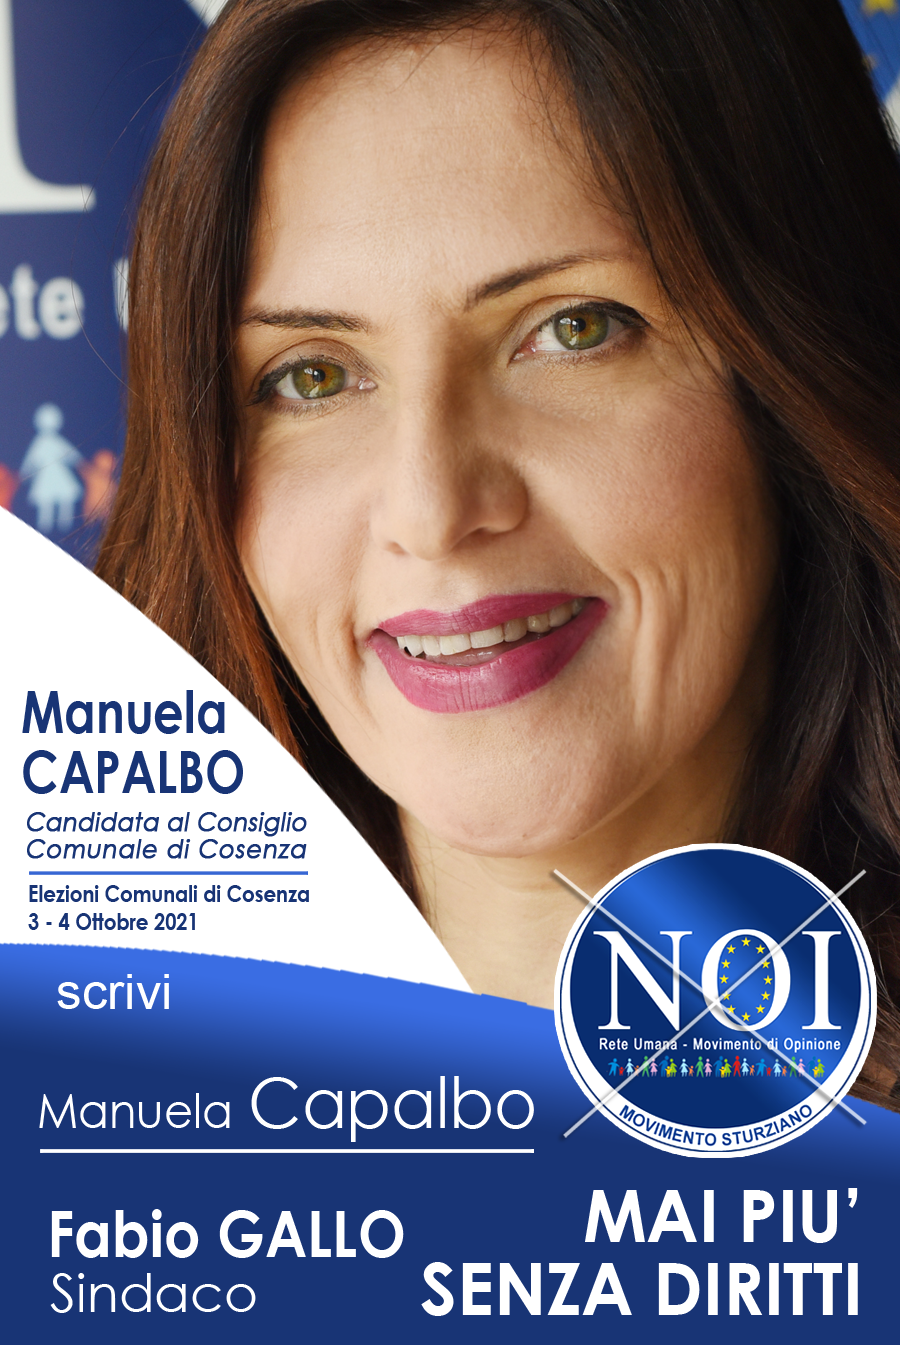 Manuela Capalbo